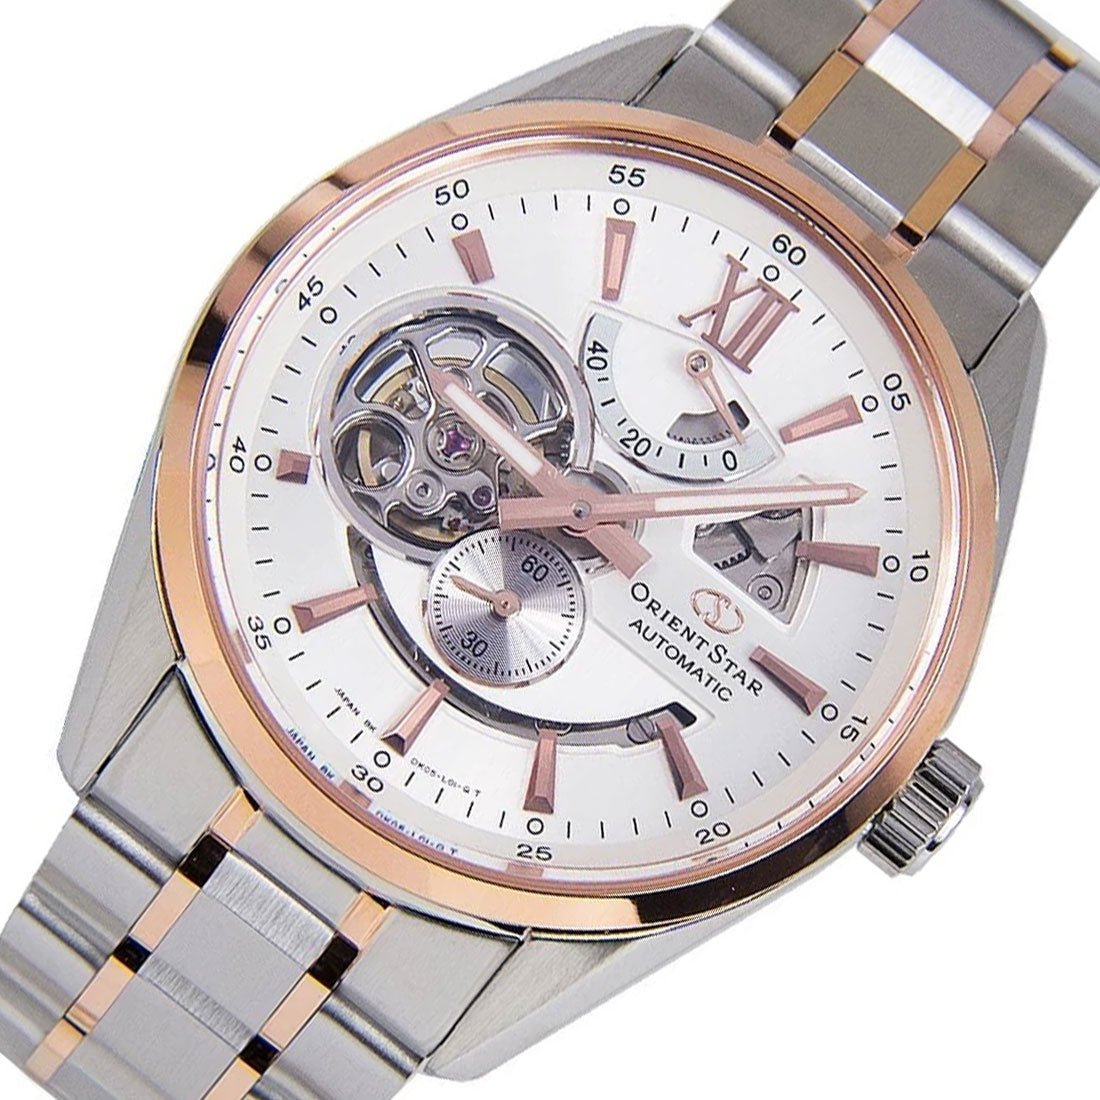 Orient Star Power Reserve DK05001W SDK05001W0 DK05001W0 Two Tone Watch -Orient